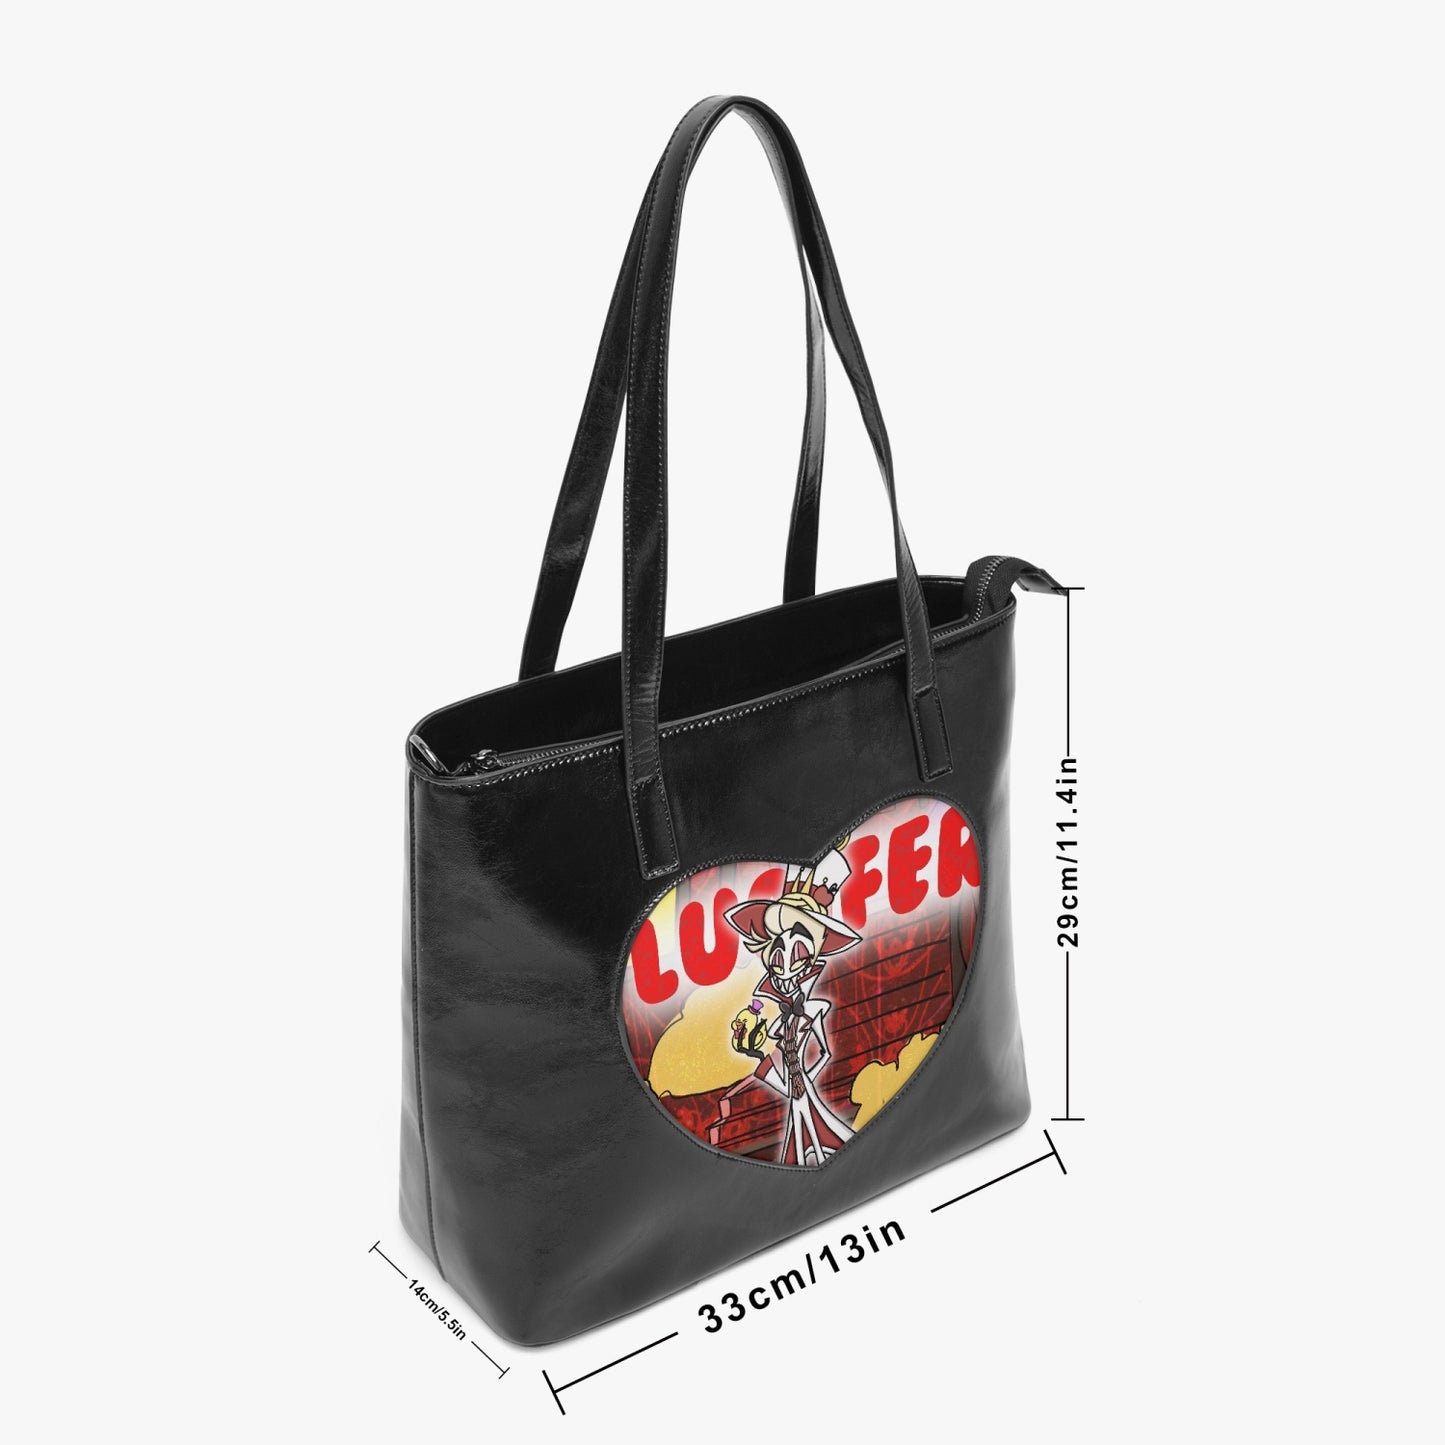 Lucifer Heart Tote Bag